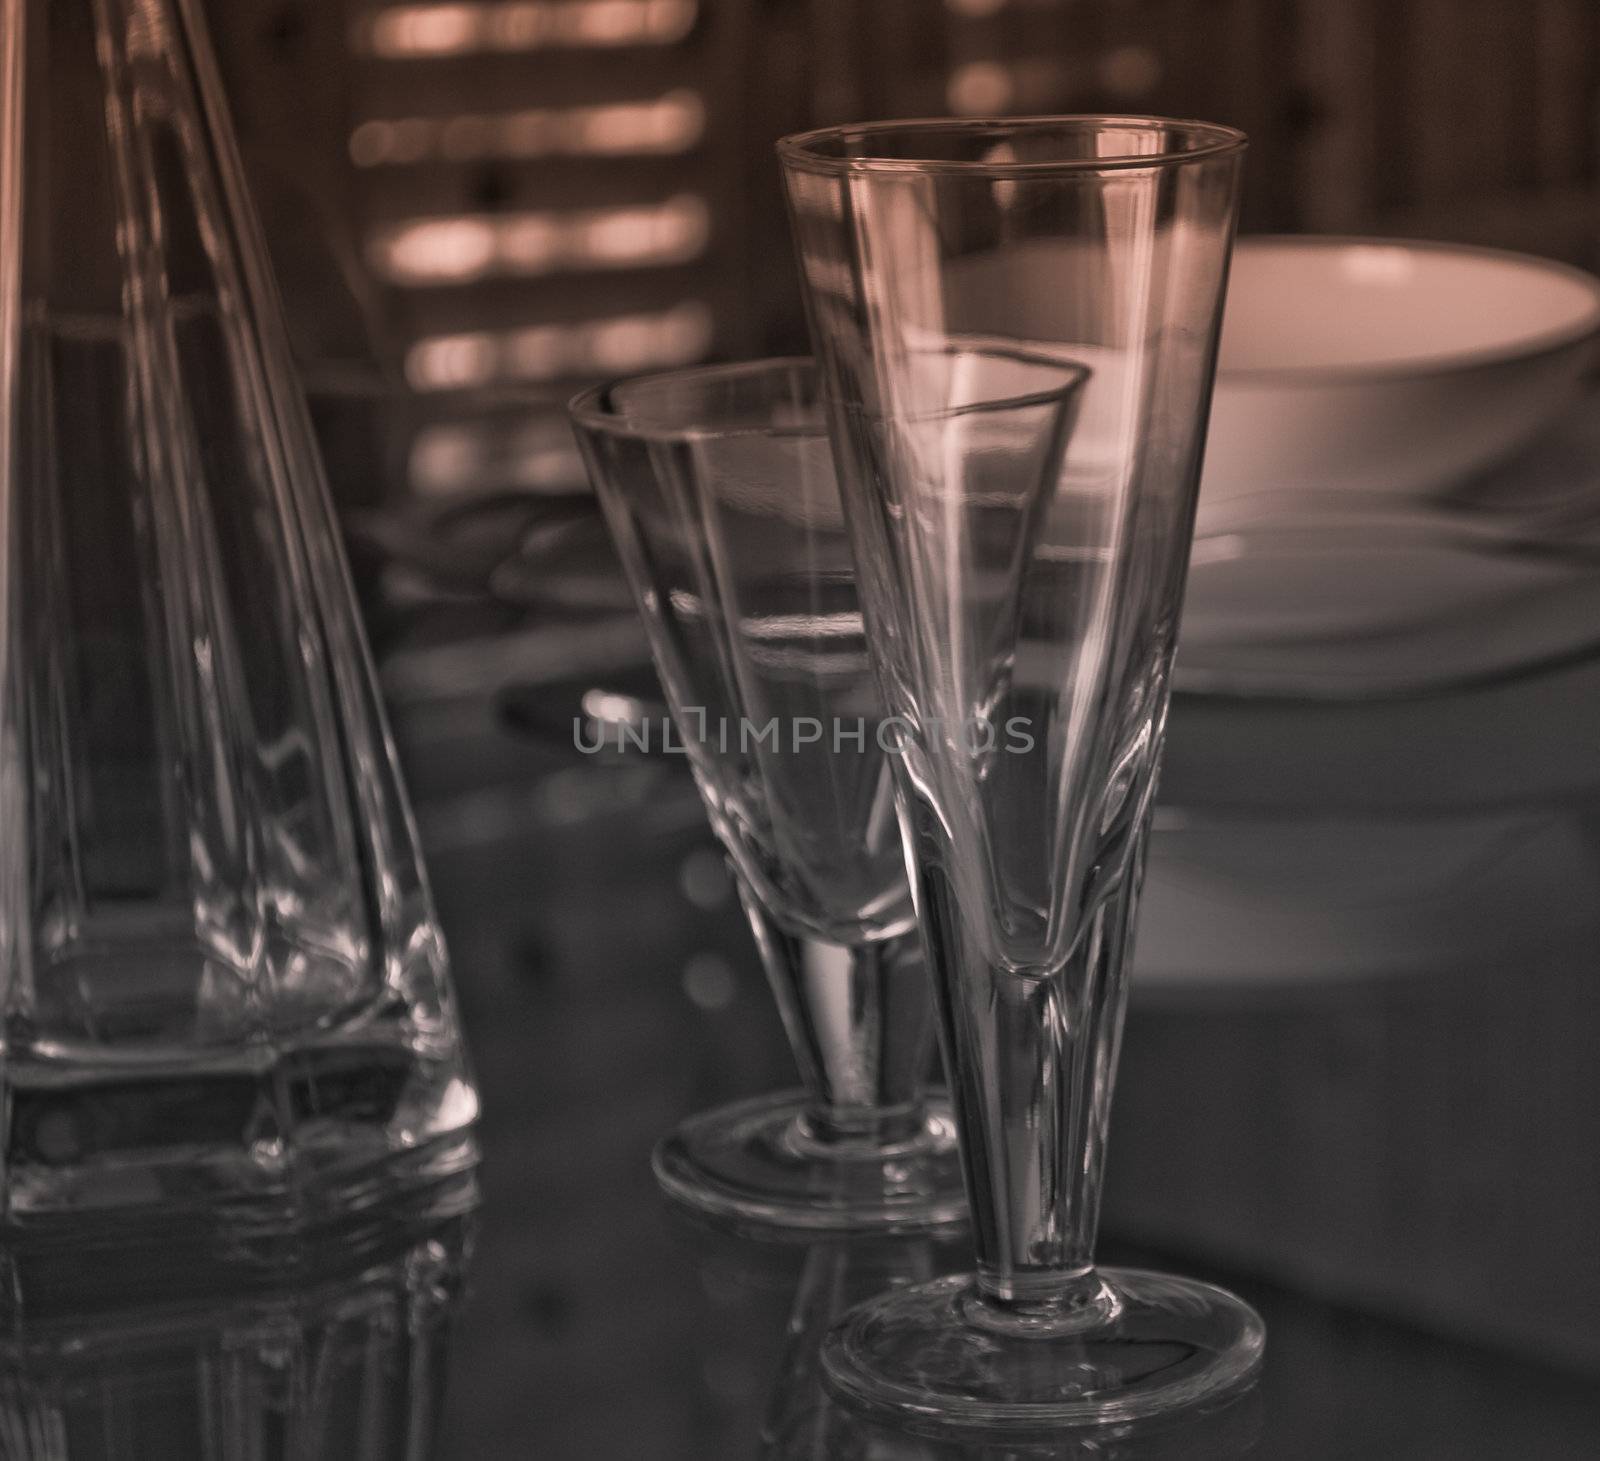 Modern tableware and glasses by geko103